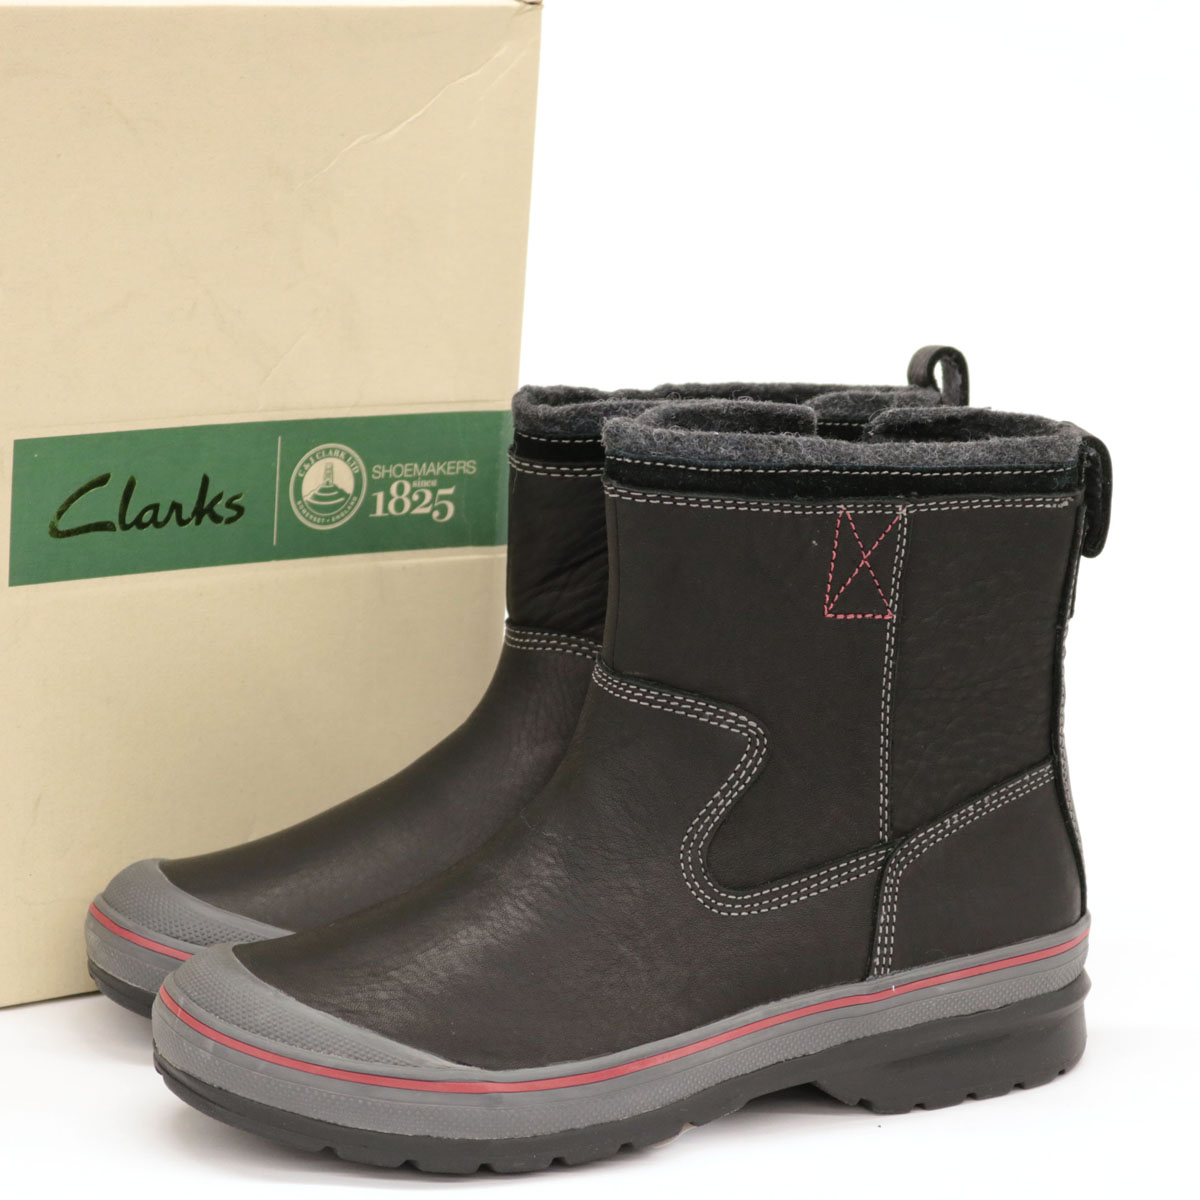 clarks men's rain boots